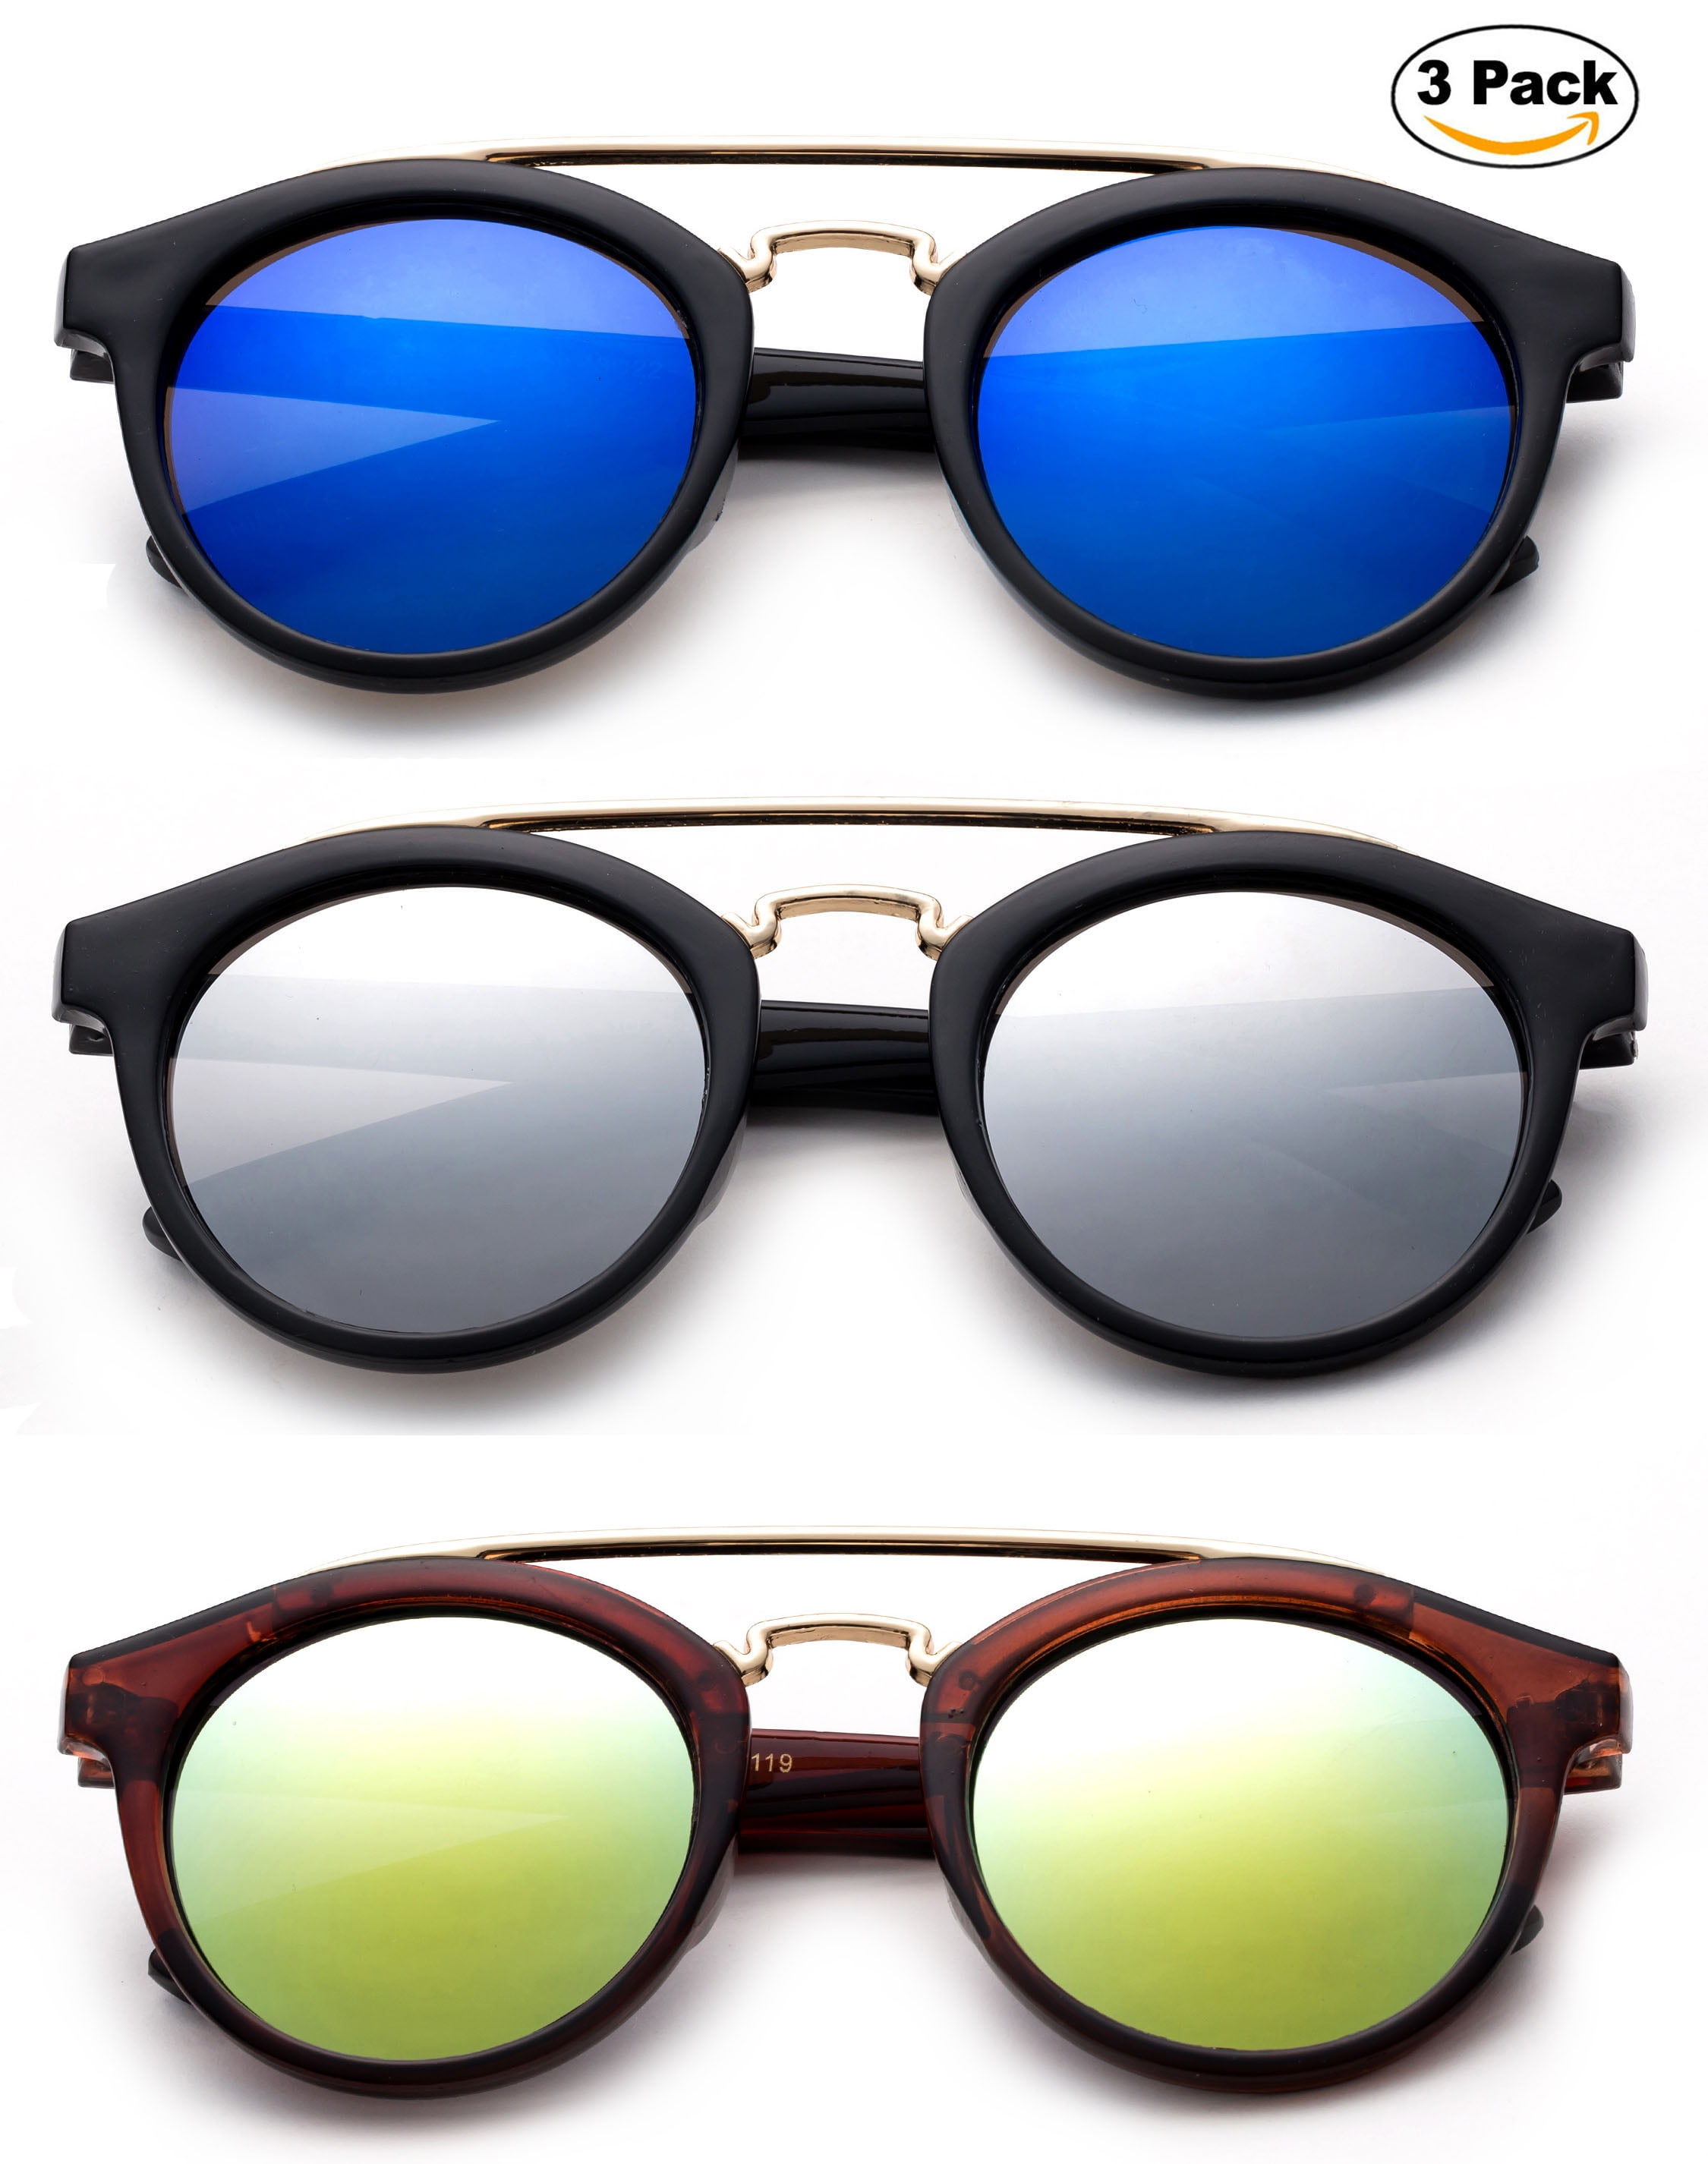 Kids Sunglasses Aviator Style Girls Heart Shade Eyewear UV 100% Lead Free 